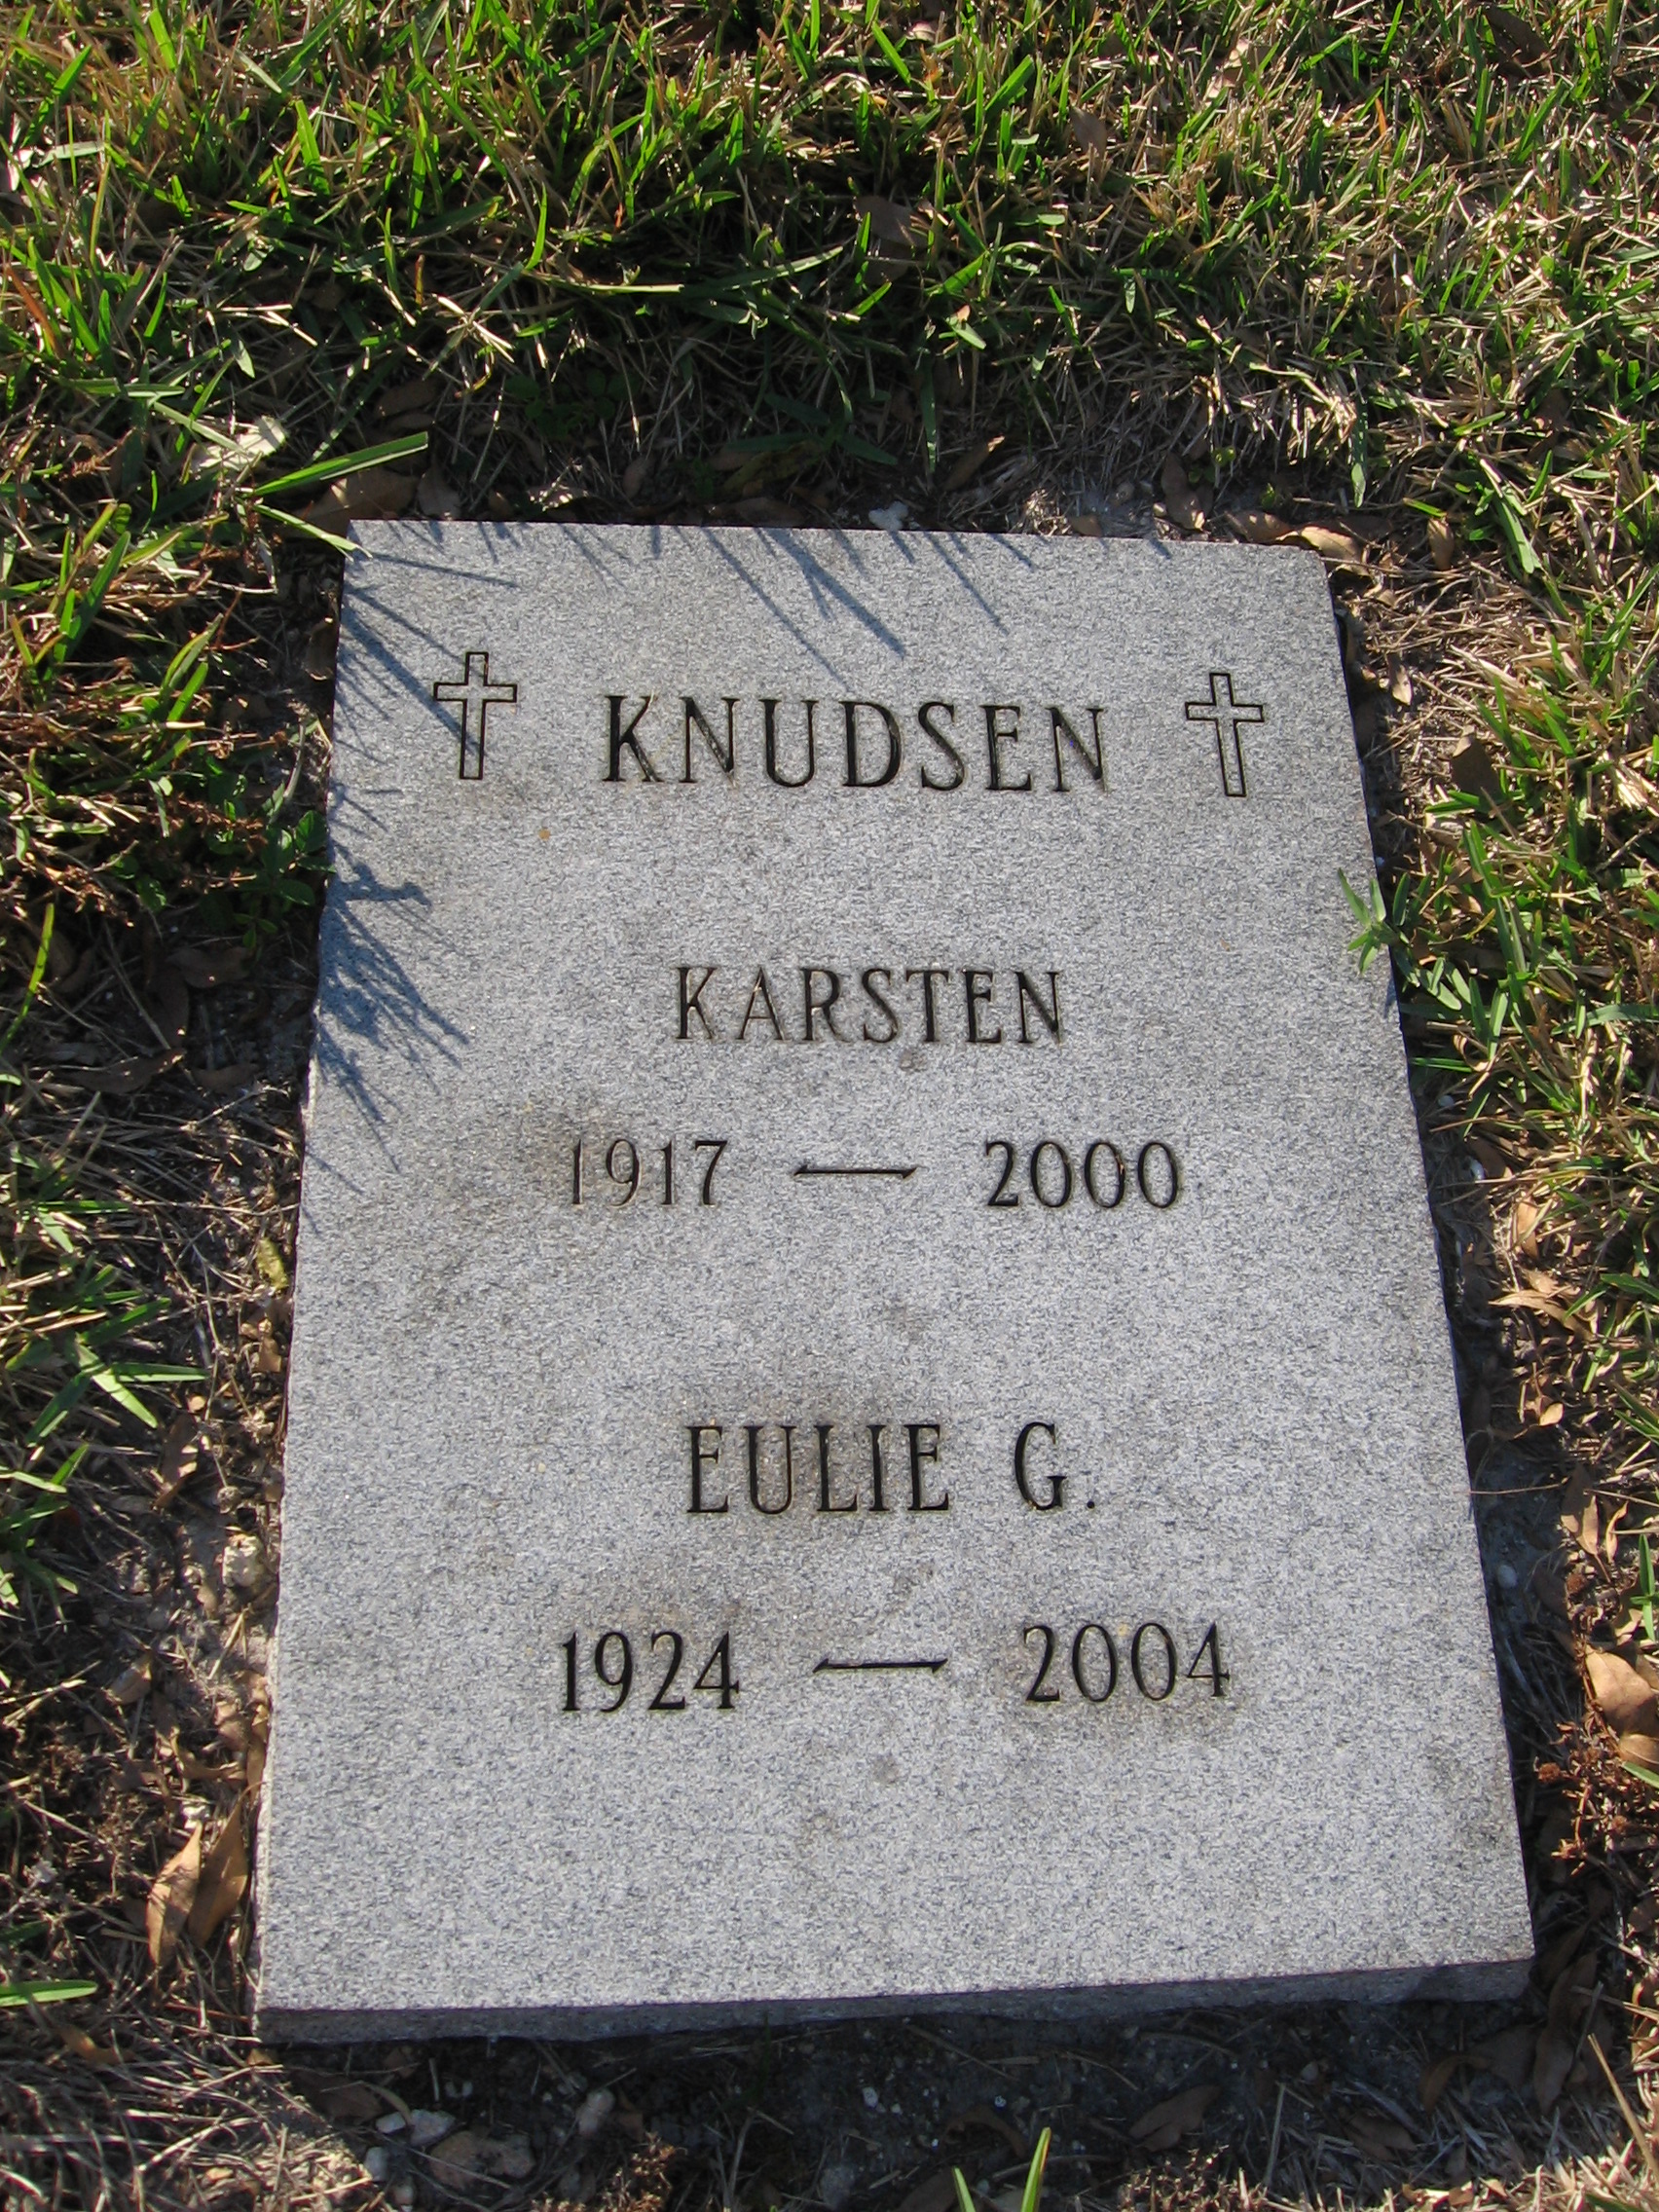 Eulie G Knudsen